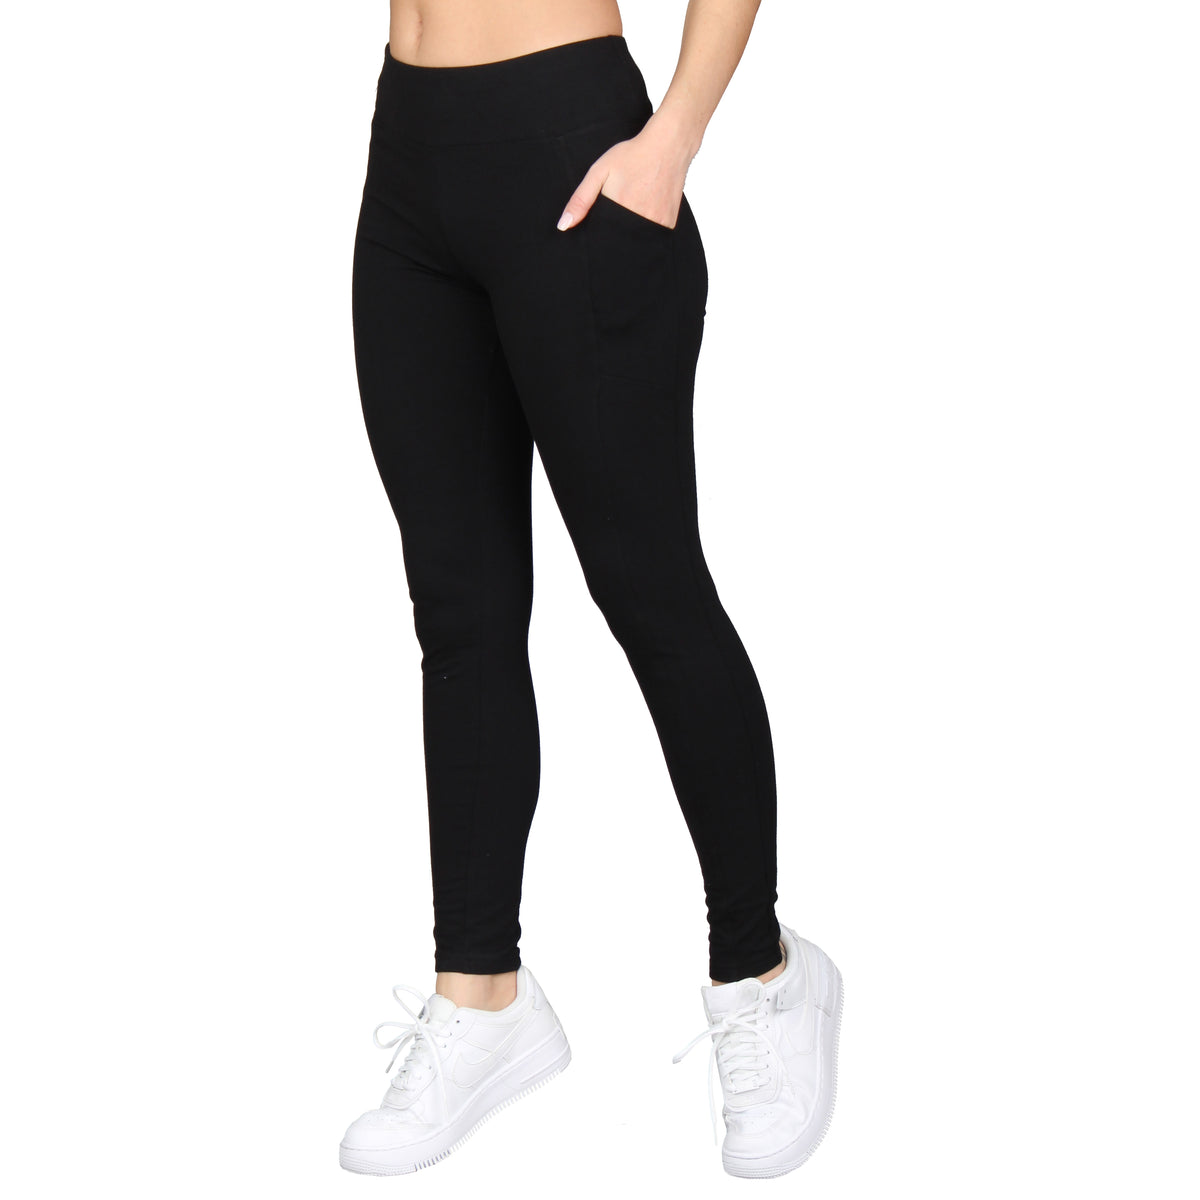 Buy CARBON BASICS Women's Slim Fit Leggings (CARB_0004_LEGGY_Multicolour_L)  at Amazon.in